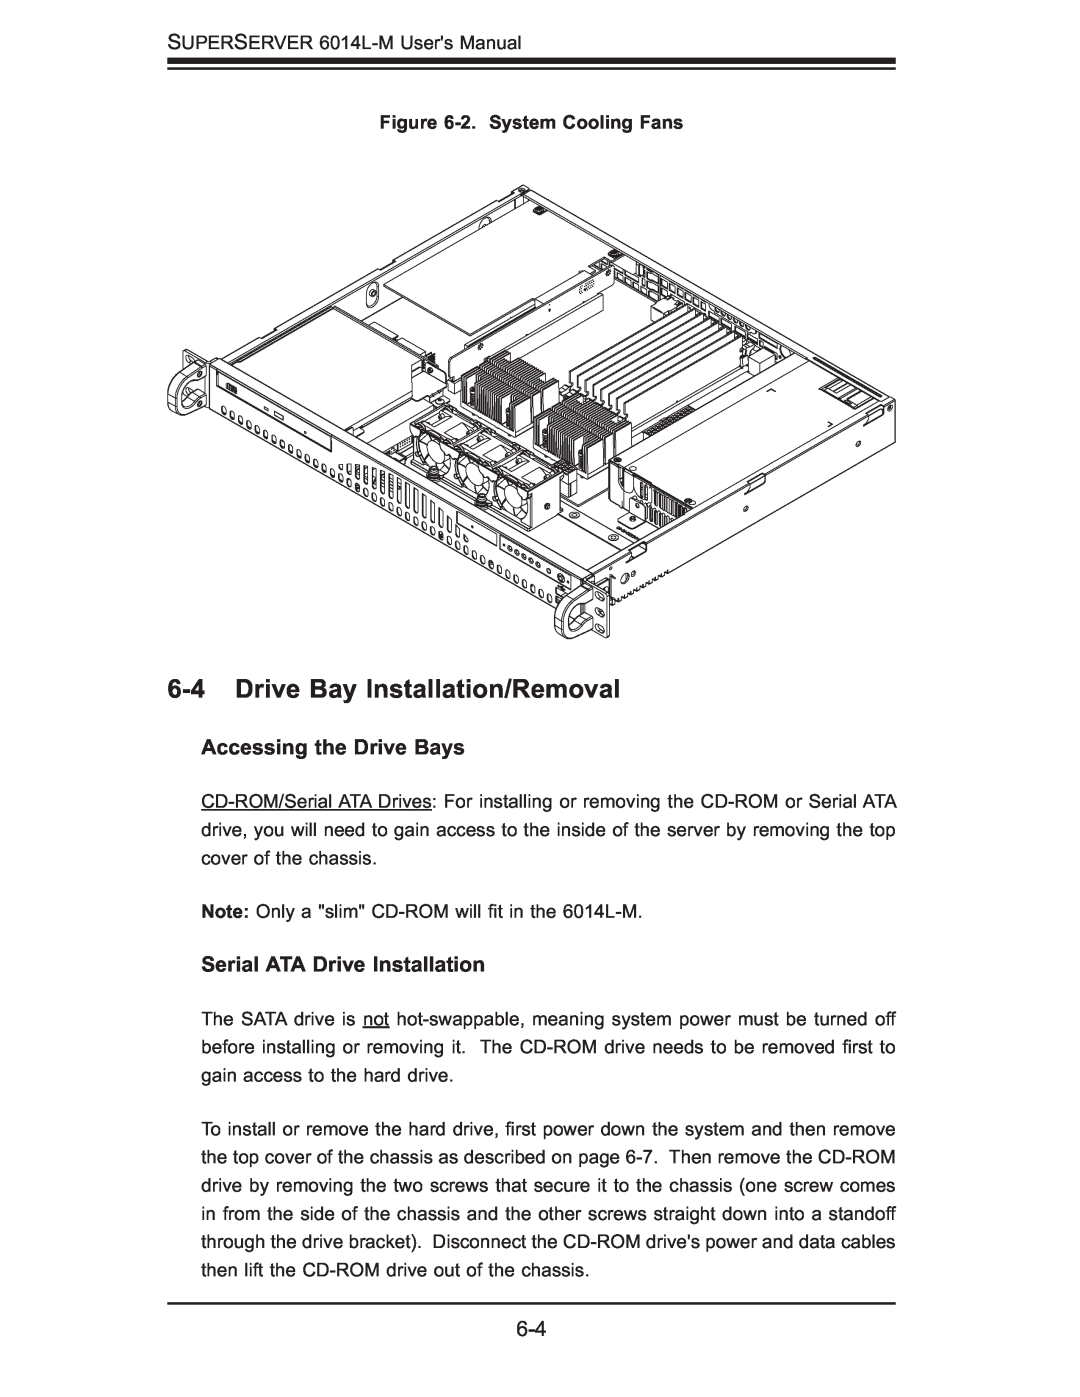 SUPER MICRO Computer 6014L-M manual Drive Bay Installation/Removal, Accessing the Drive Bays, Serial ATA Drive Installation 